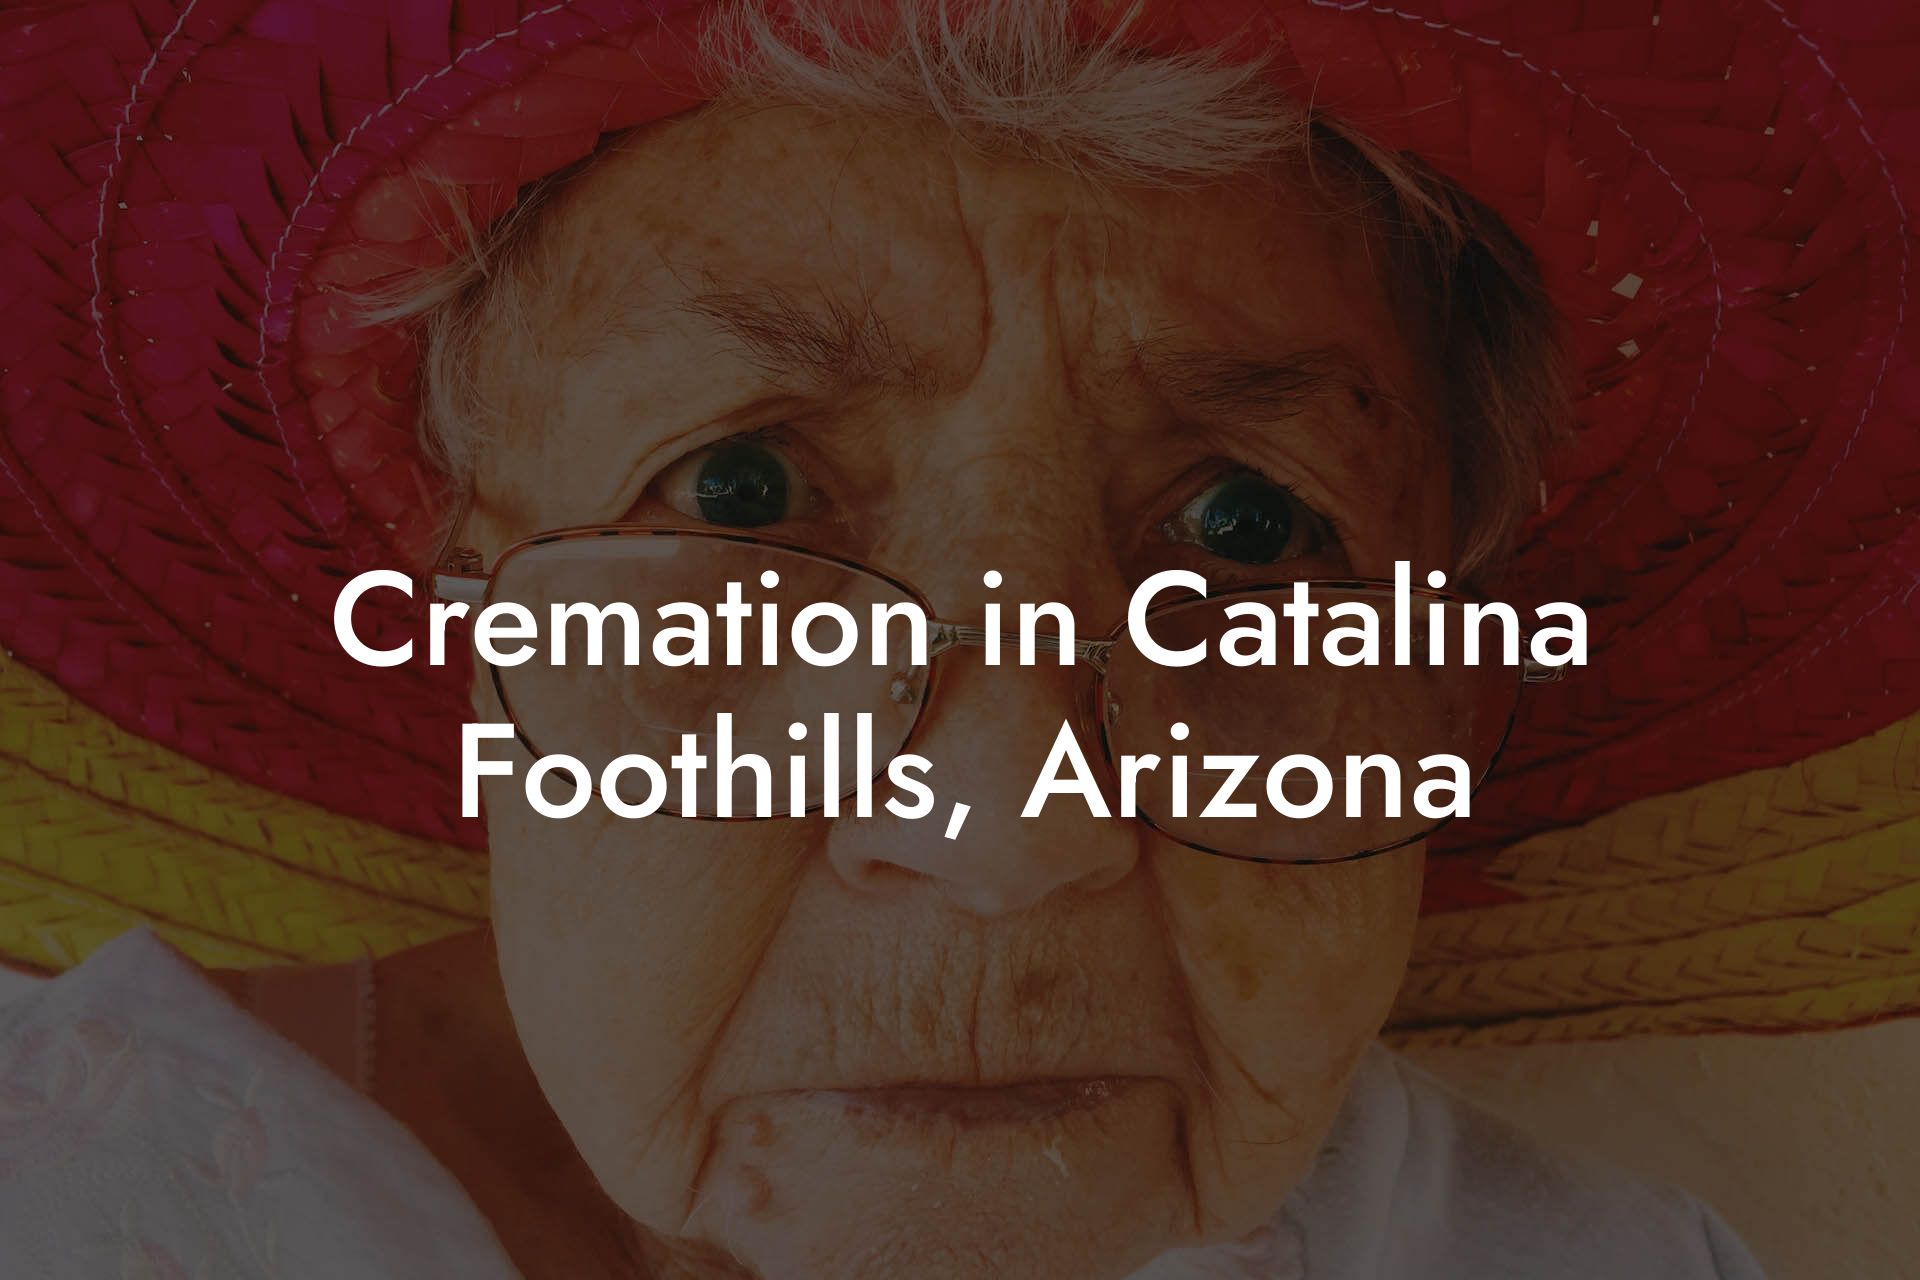 Cremation in Catalina Foothills, Arizona